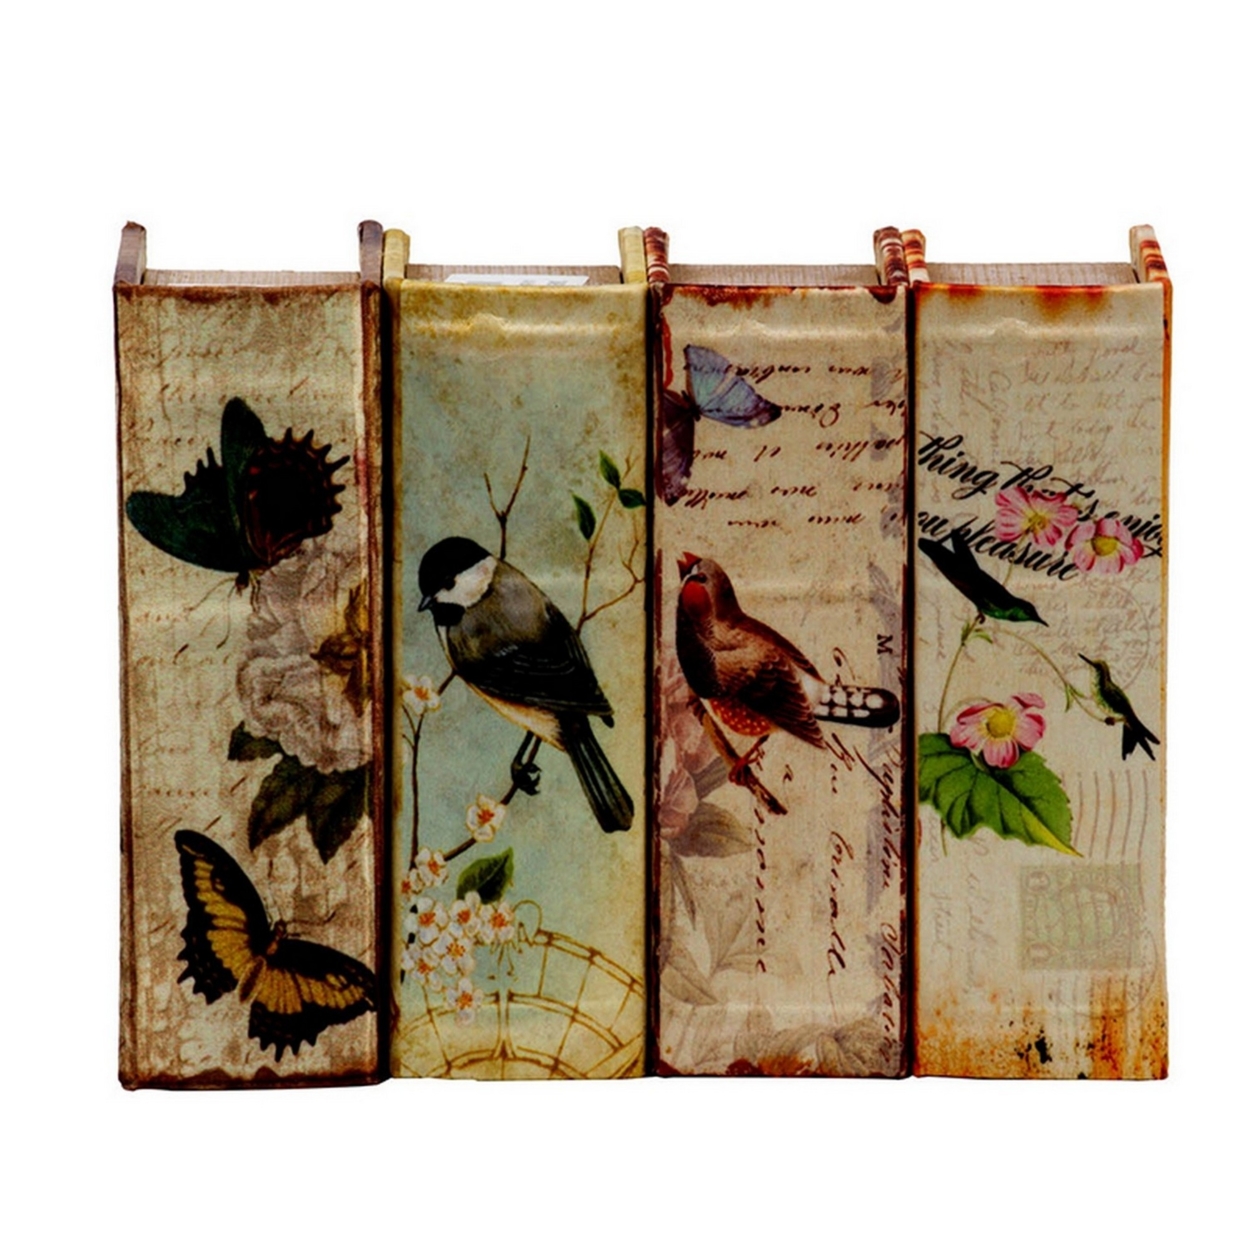 Anya Set Of 4 Artisanal Boxes For Accessories, Book Inspired Look, Birds- Saltoro Sherpi